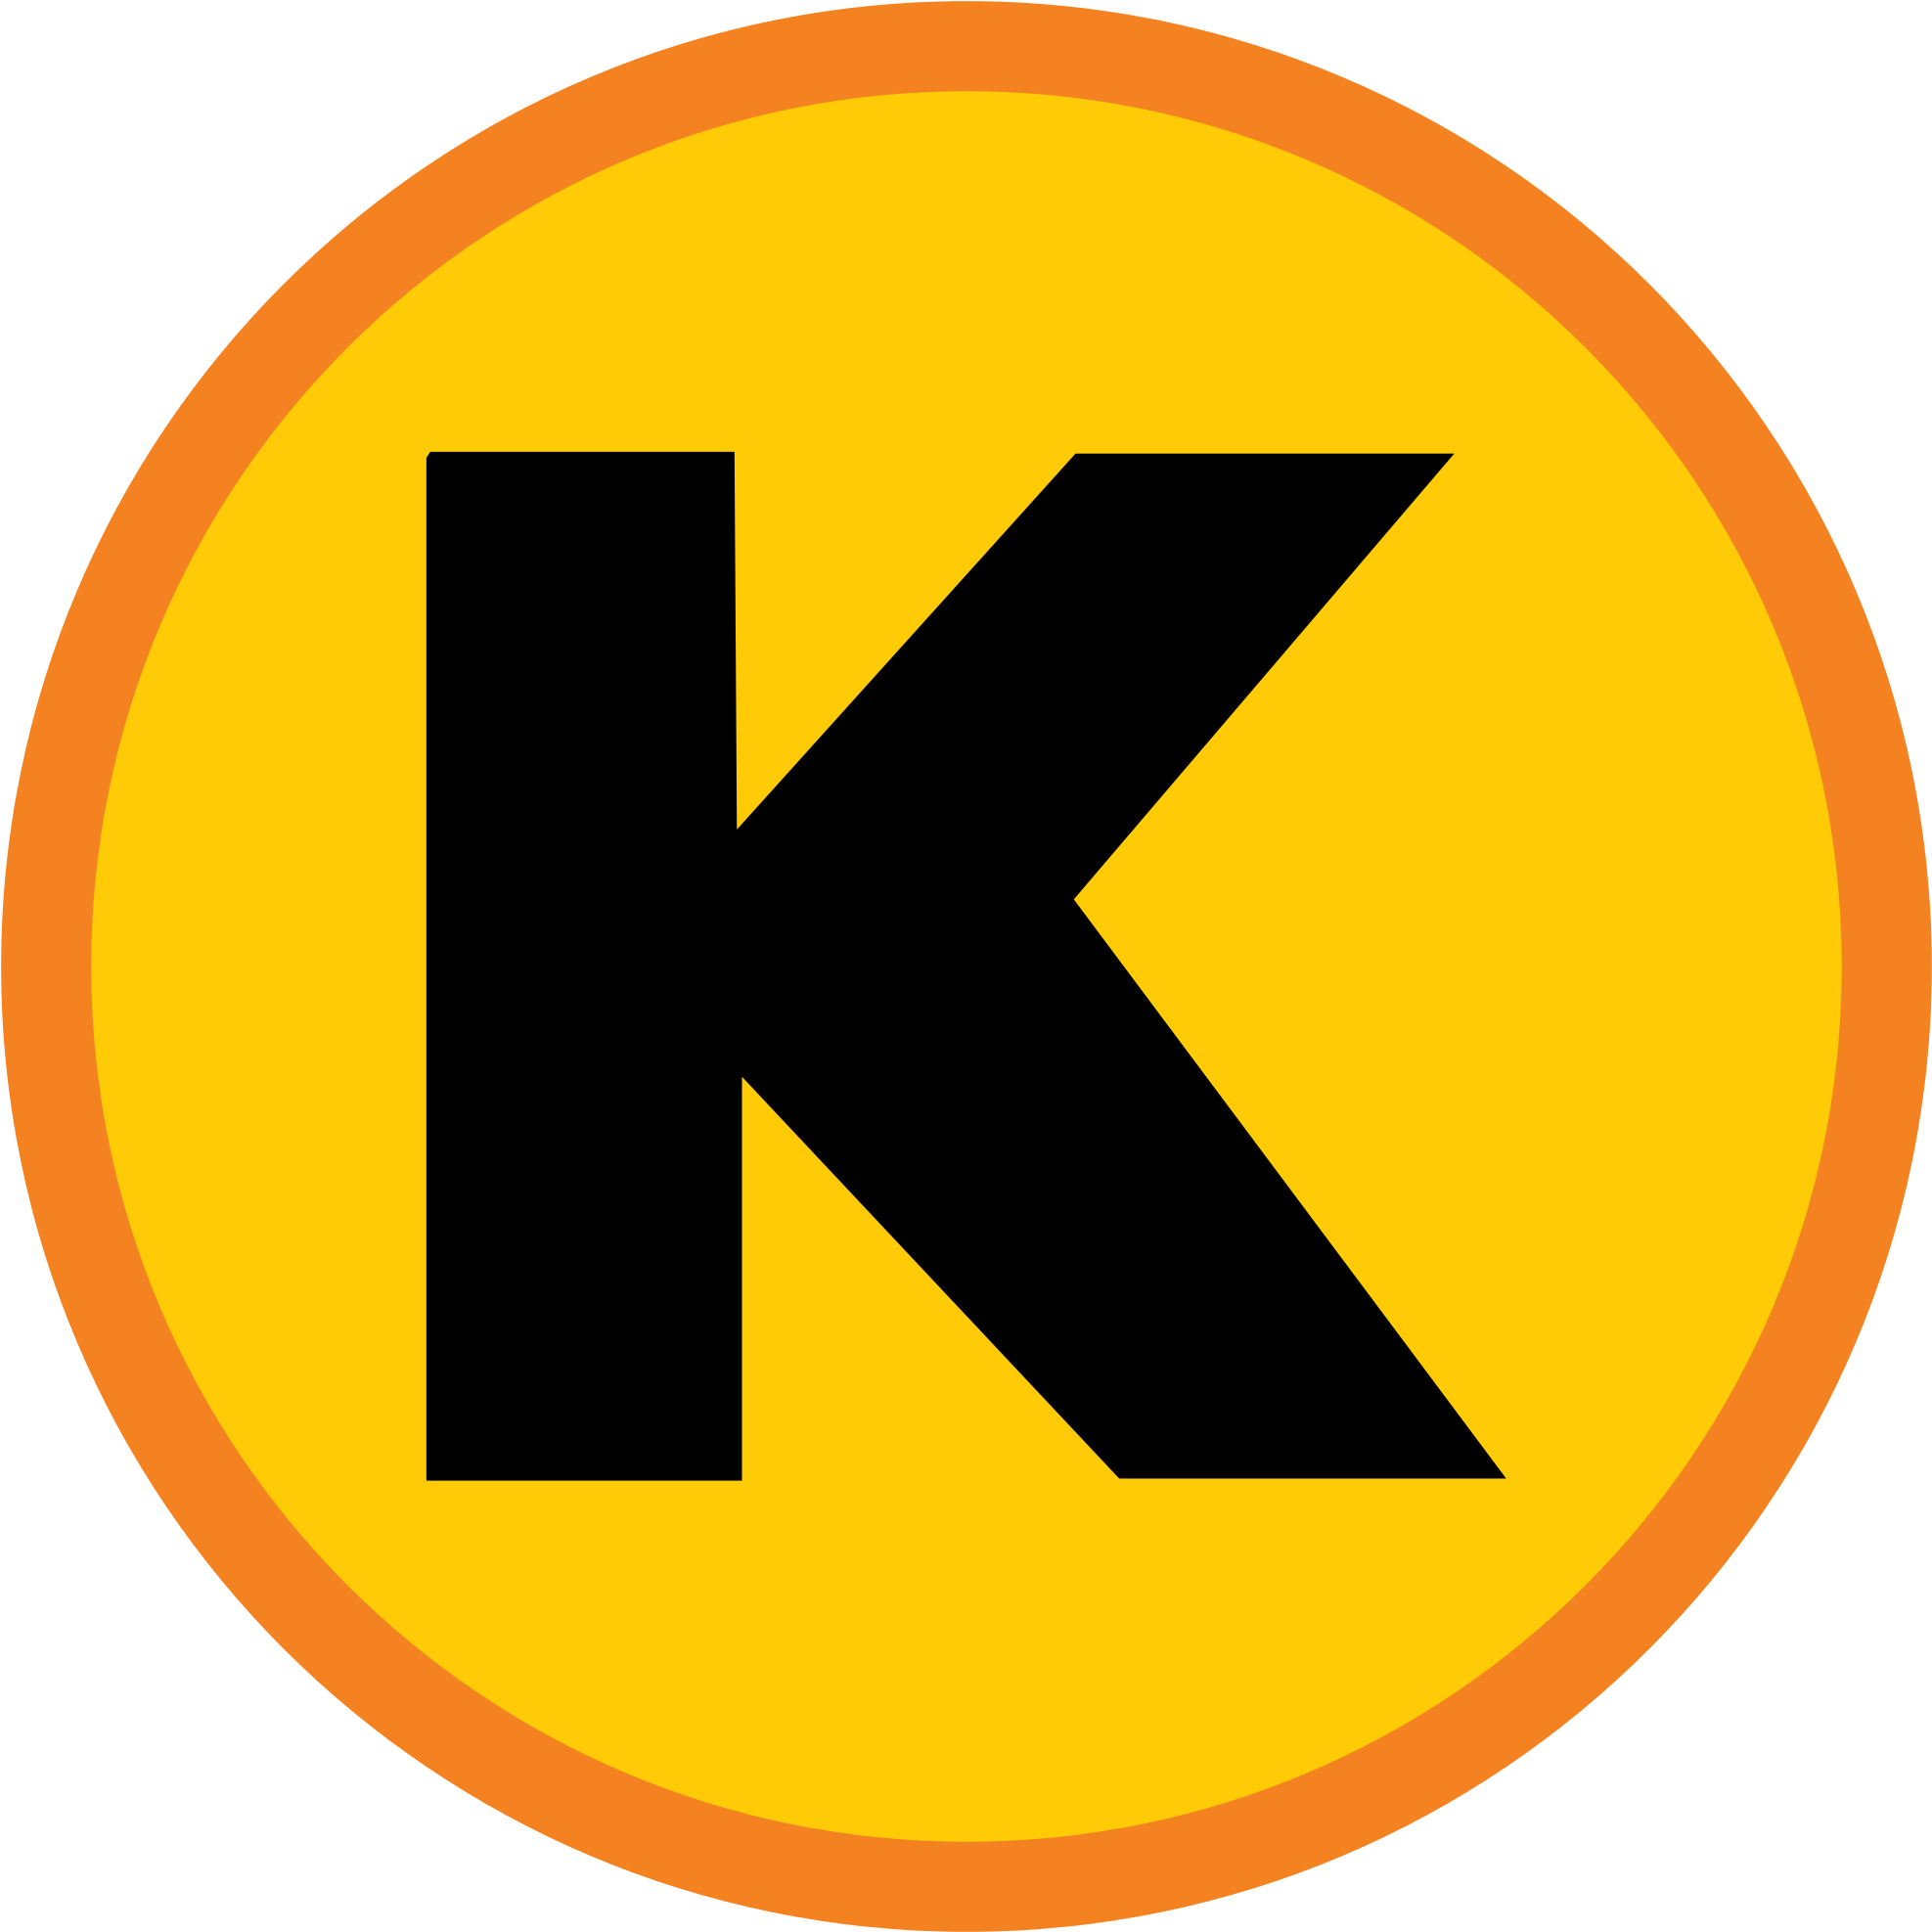 K channel. Буква а логотип. Логотип с буквой k. Буква а в круге. Буква а желтая.